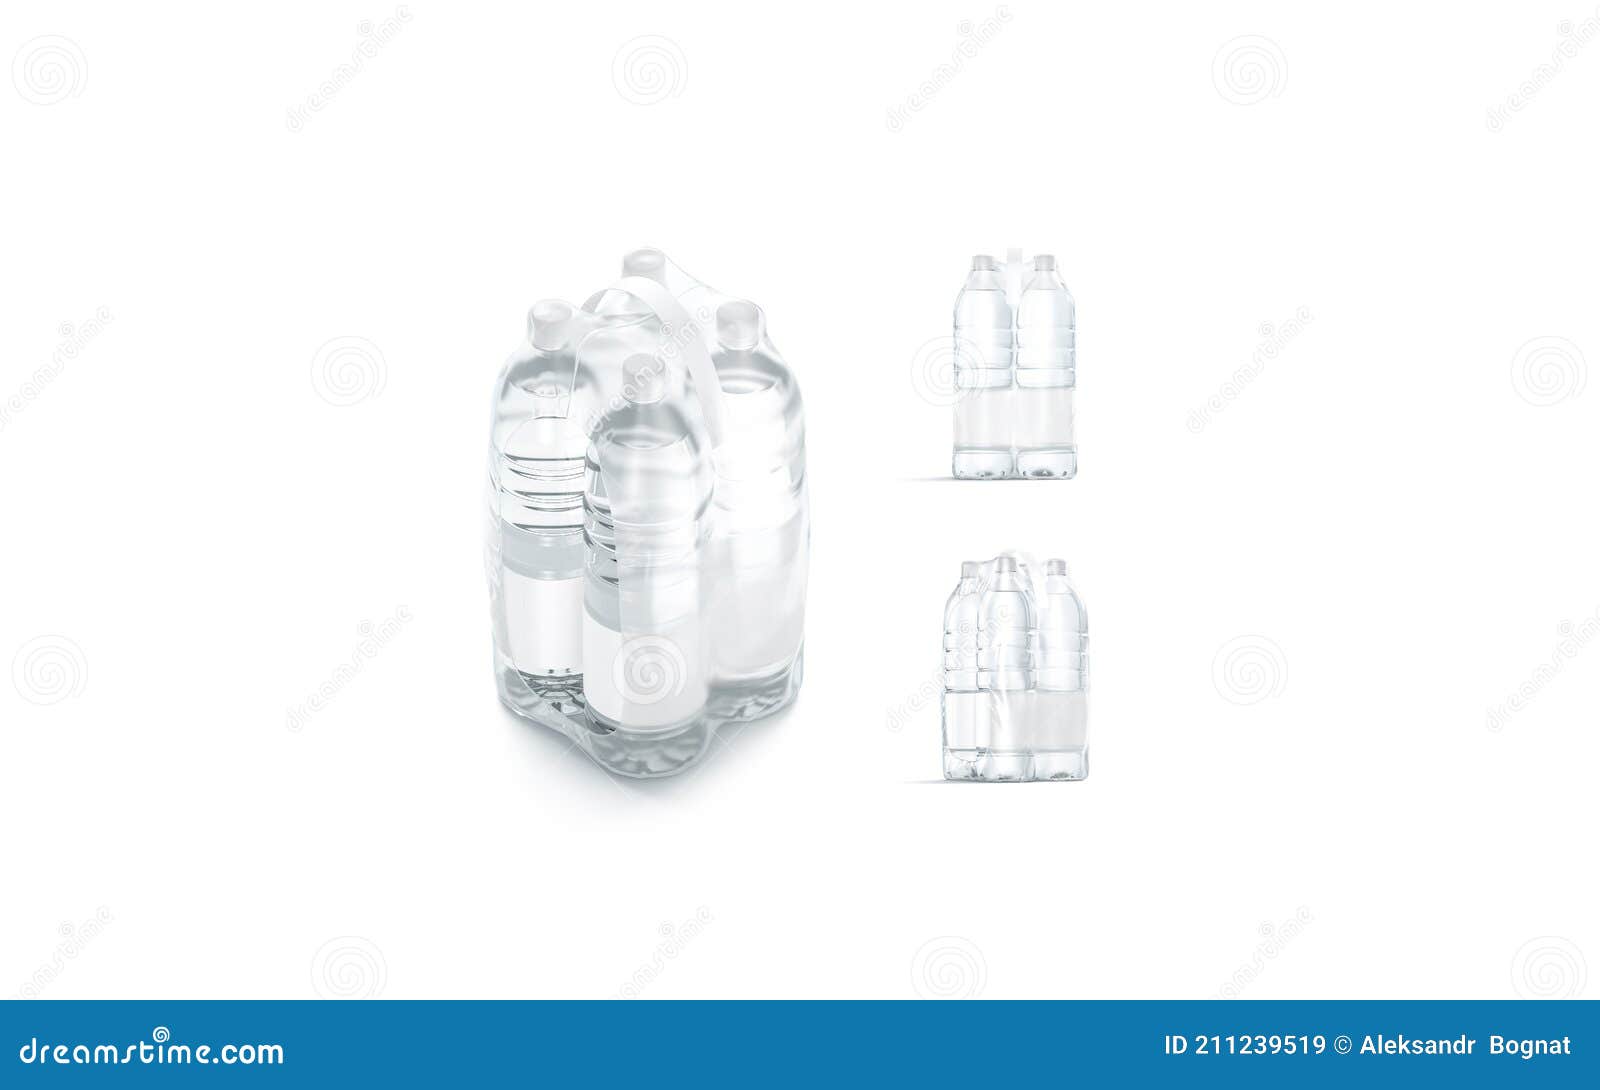 blank plastic bottle in transparent shrink wrap mockup, different views